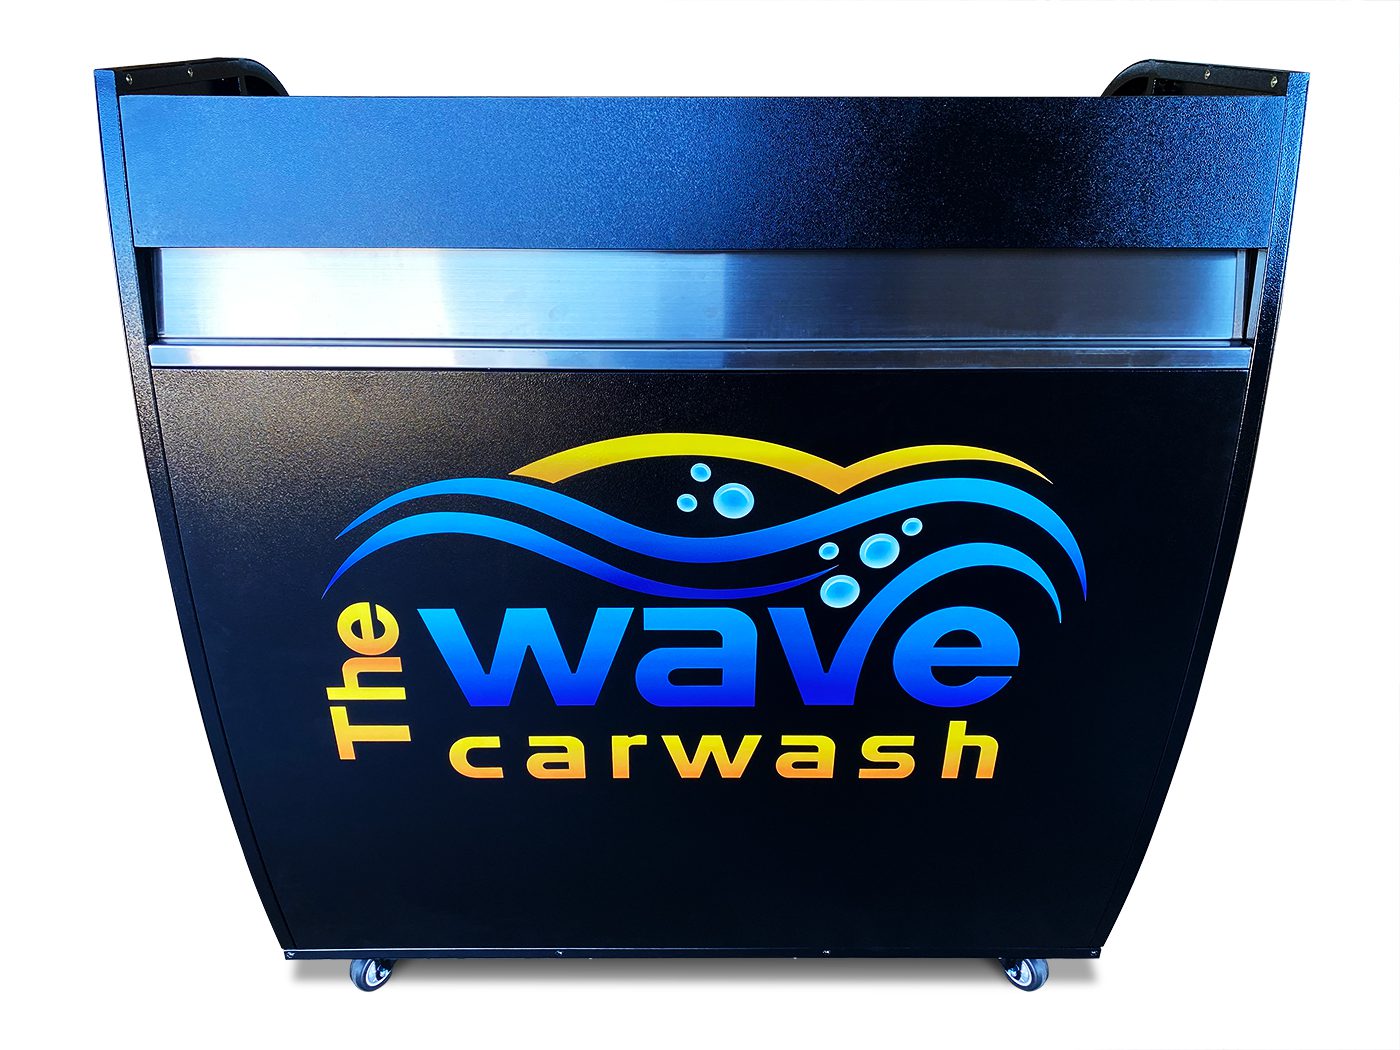 The Wave Carwash Professional Kiosk